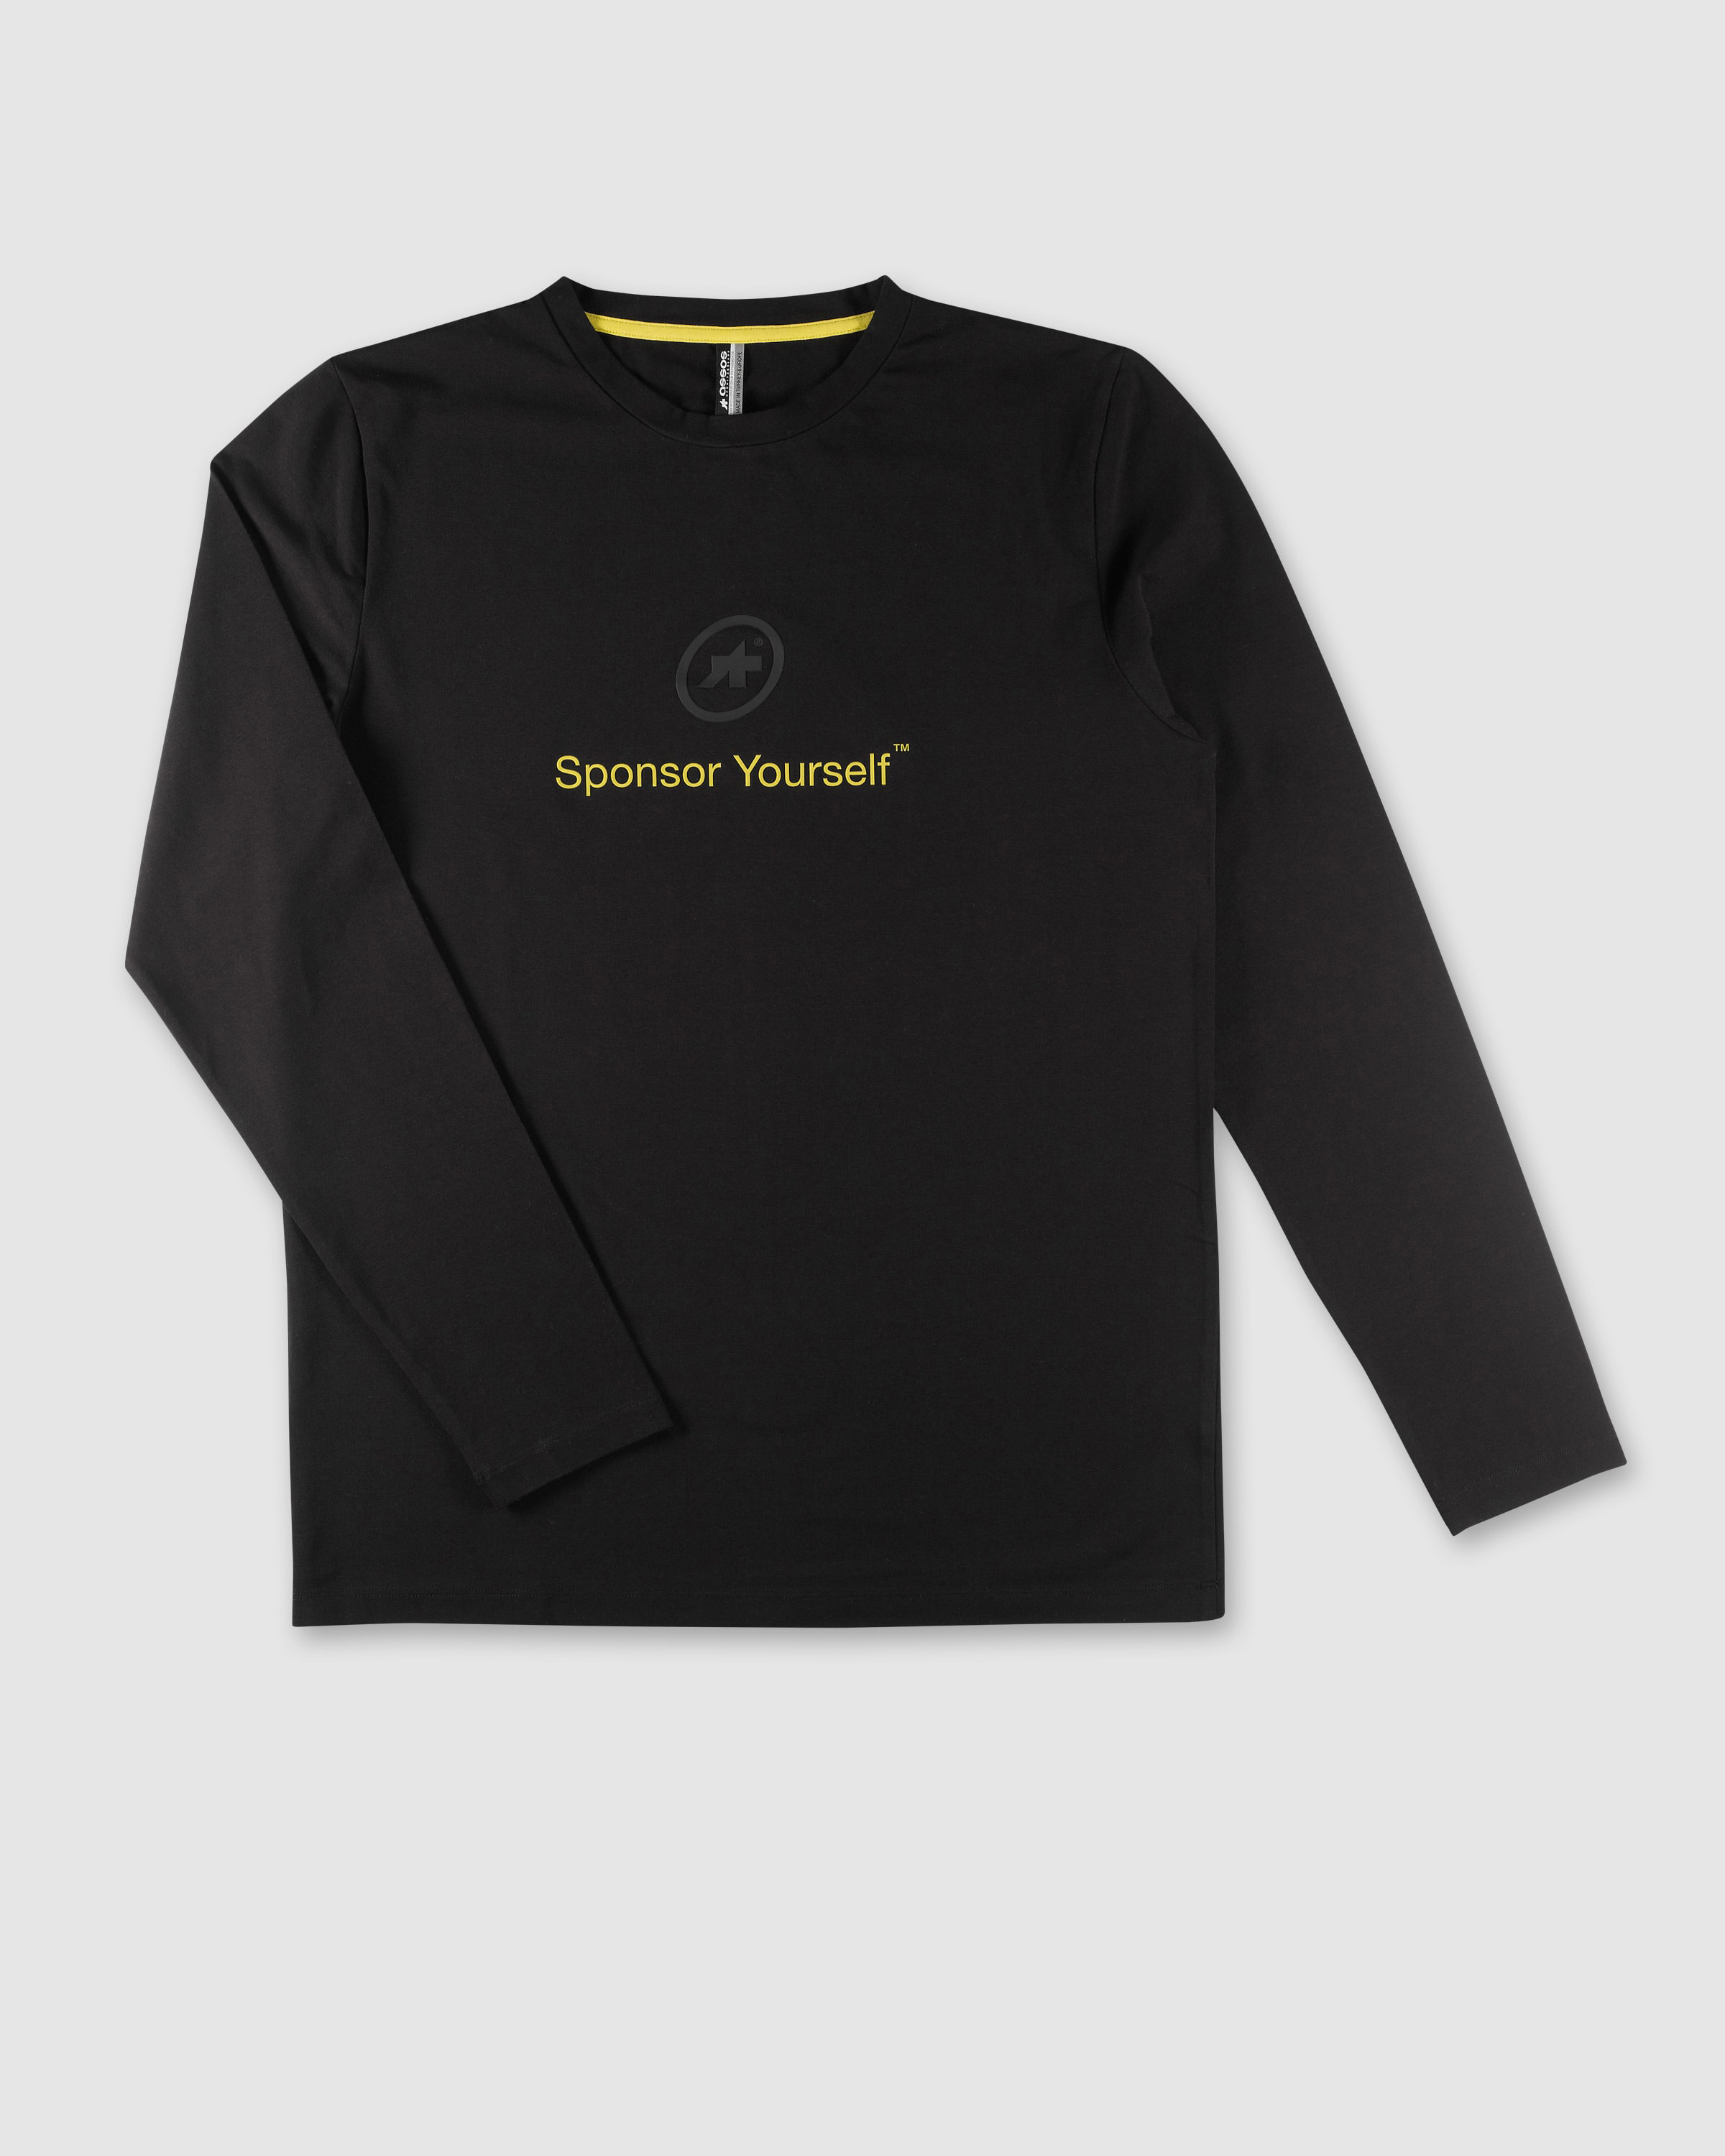 T-shirt Sponsor Yourself LS - ASSOS Of Switzerland - Official Outlet